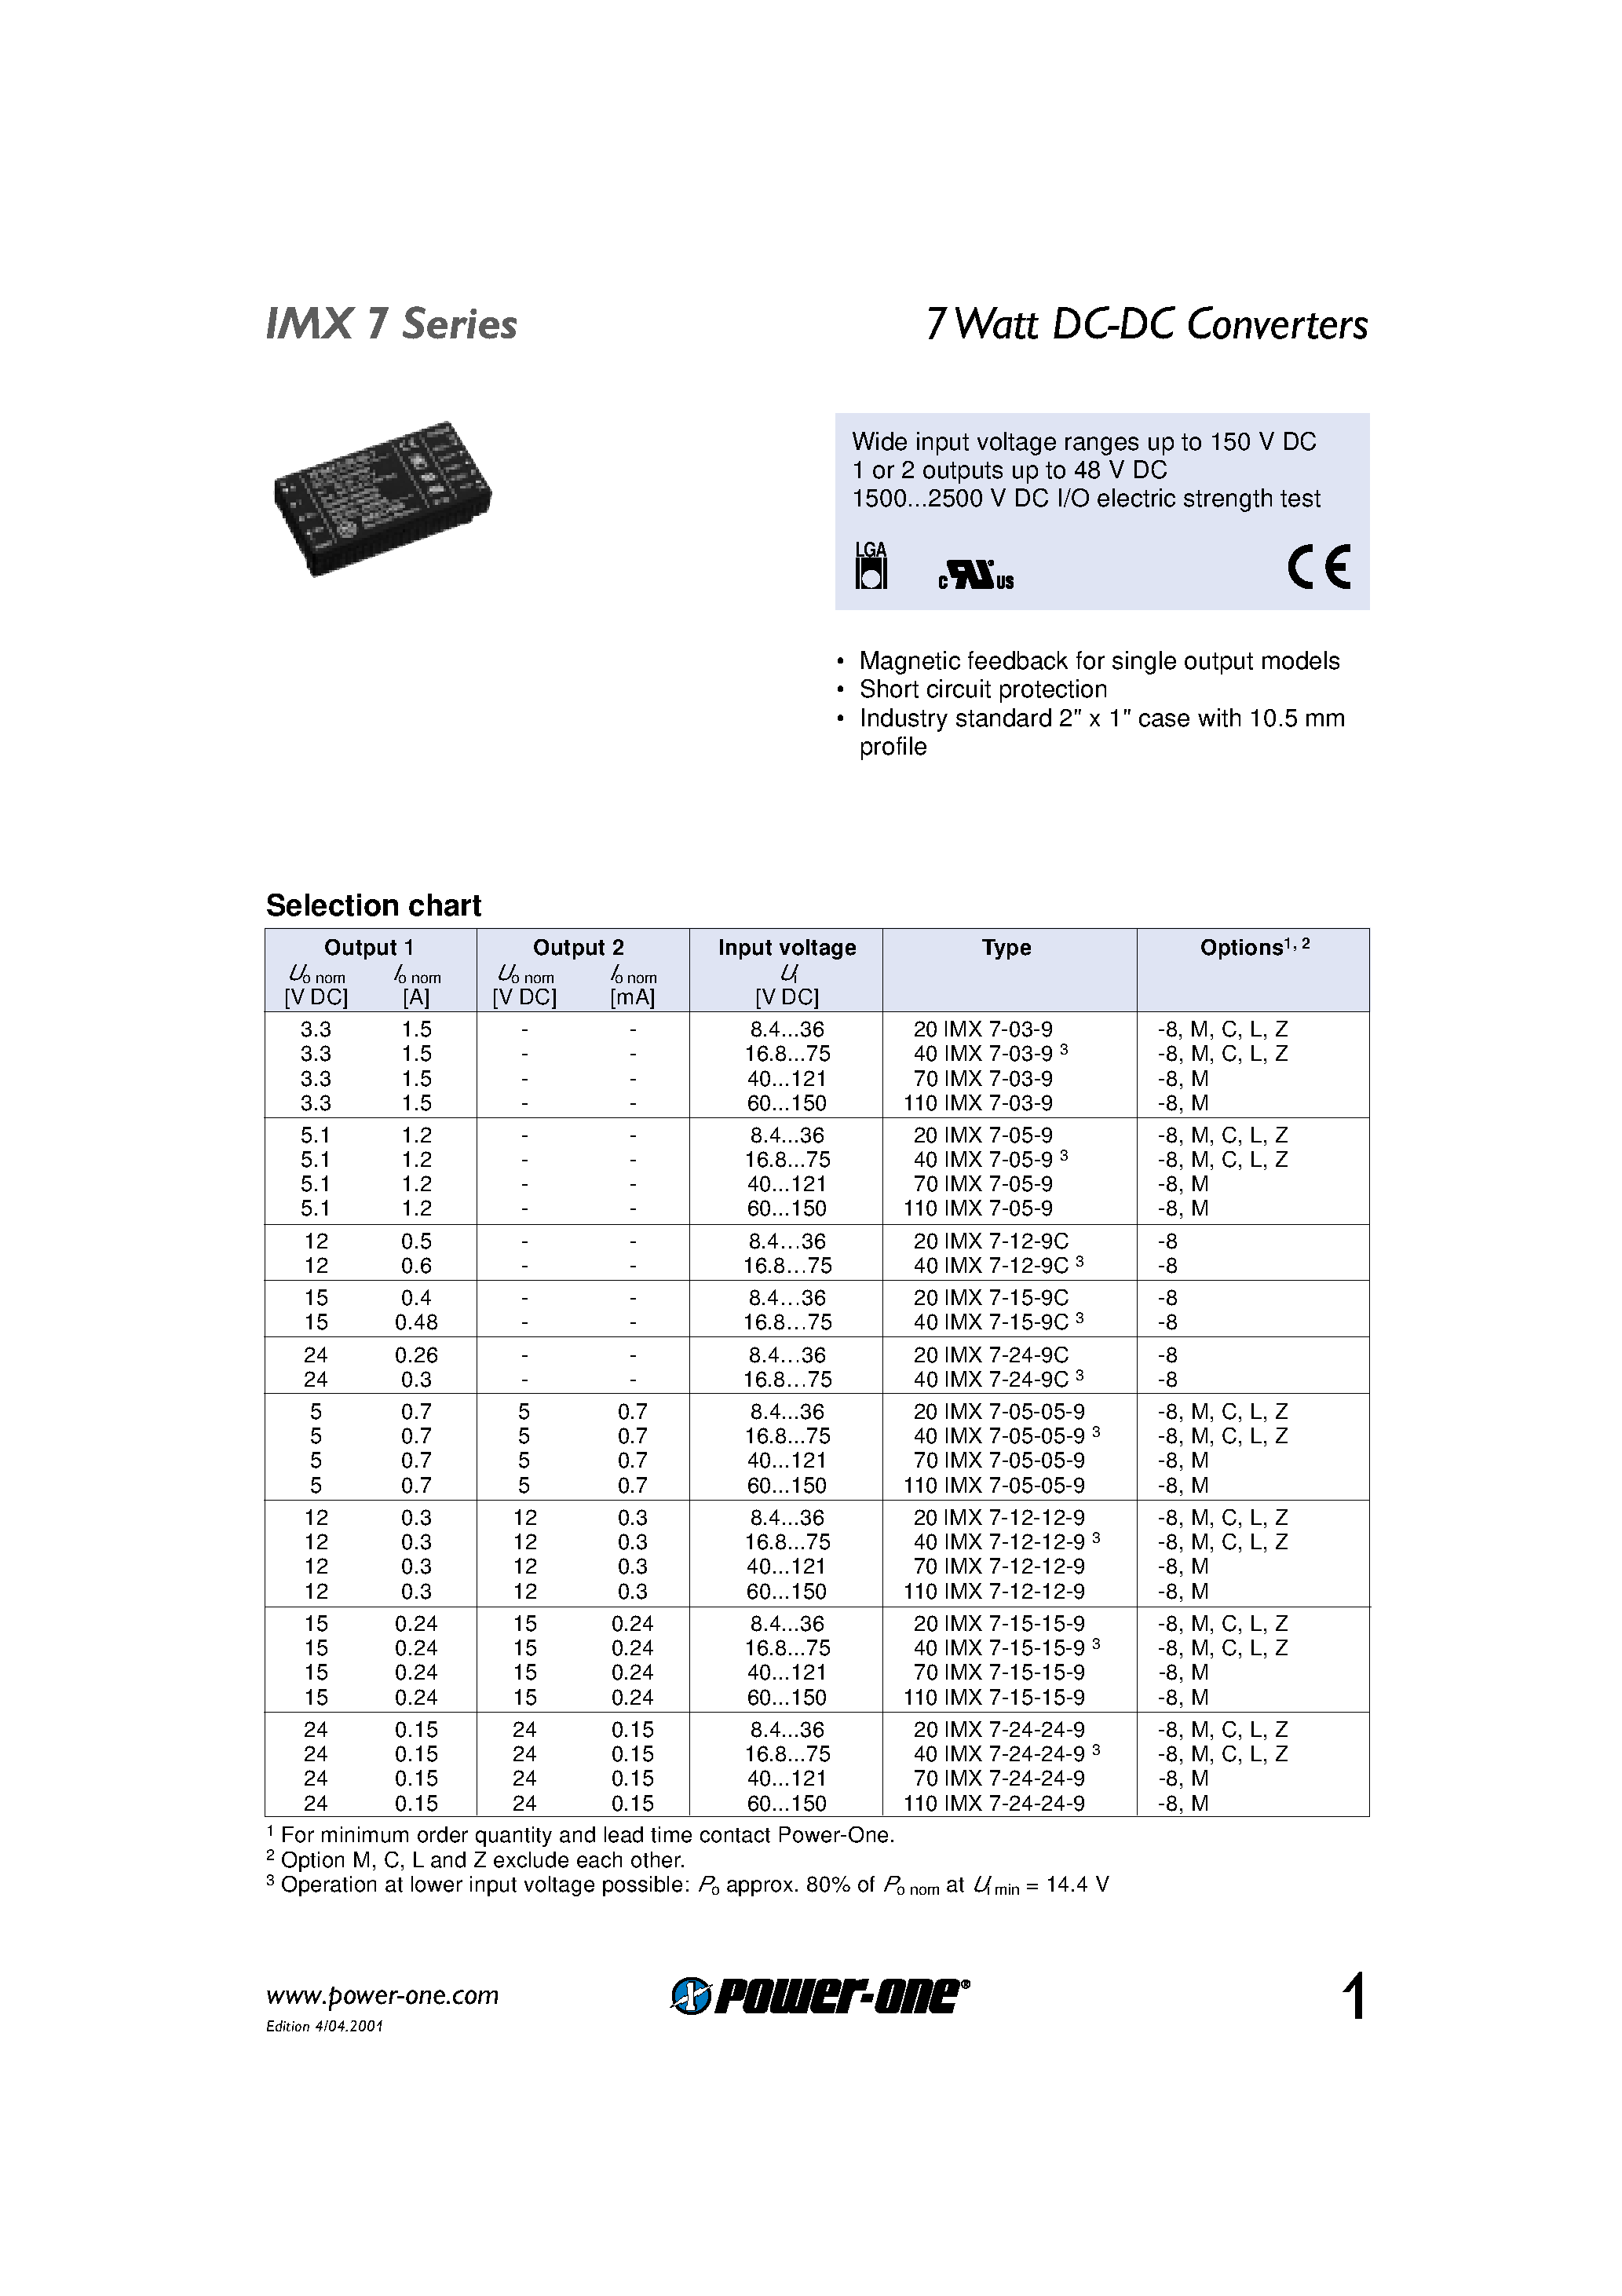 Datasheet 70IMX7-03-9 - 7 Watt DC-DC Converters page 1